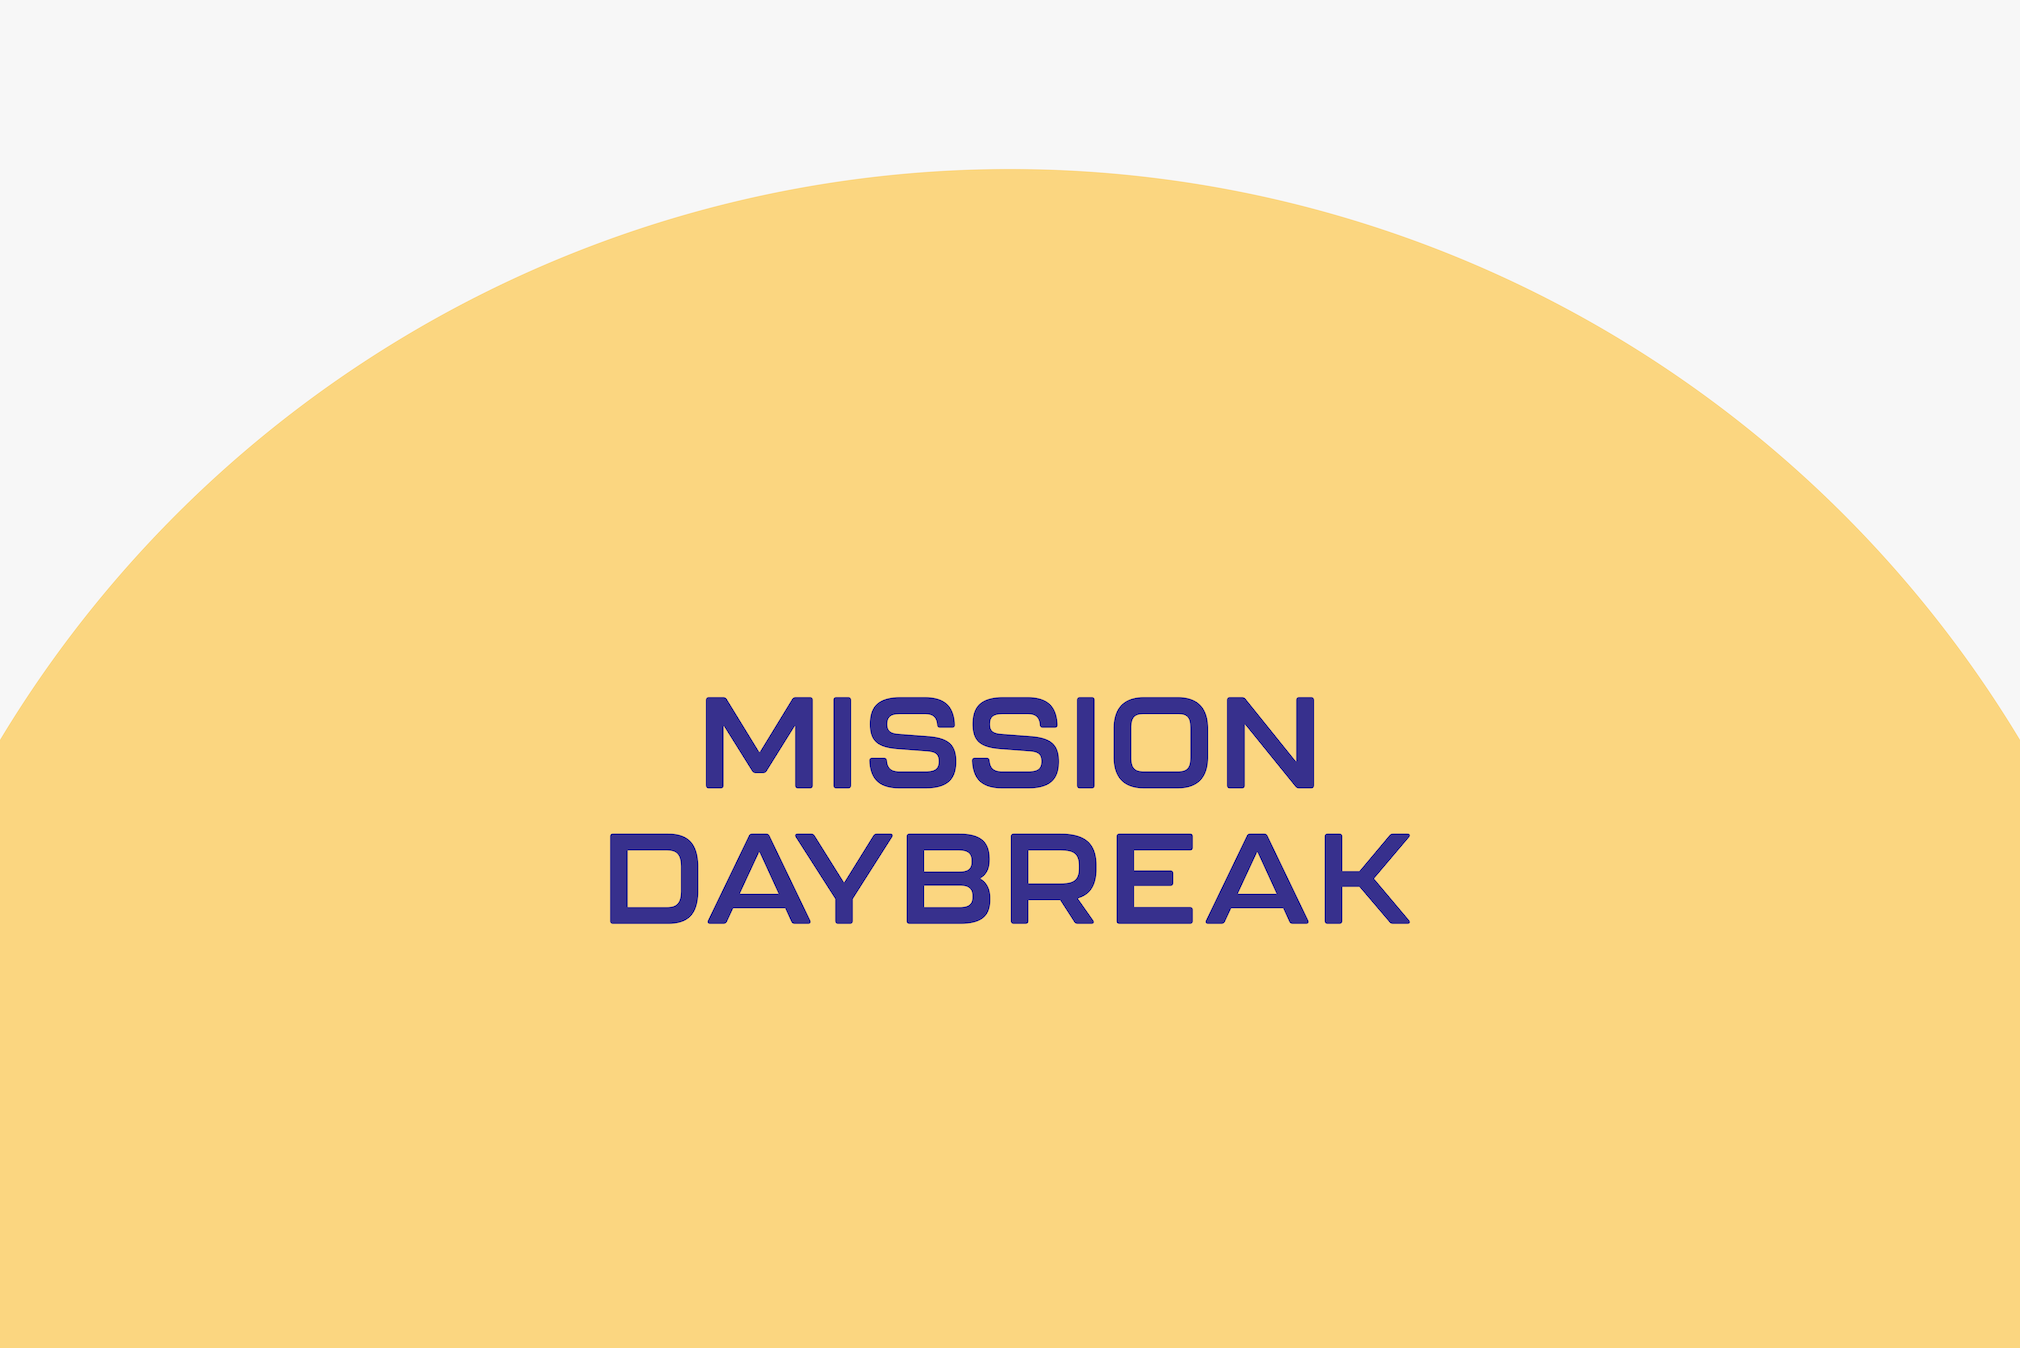 Mission Daybreak announces Phase 1 awards